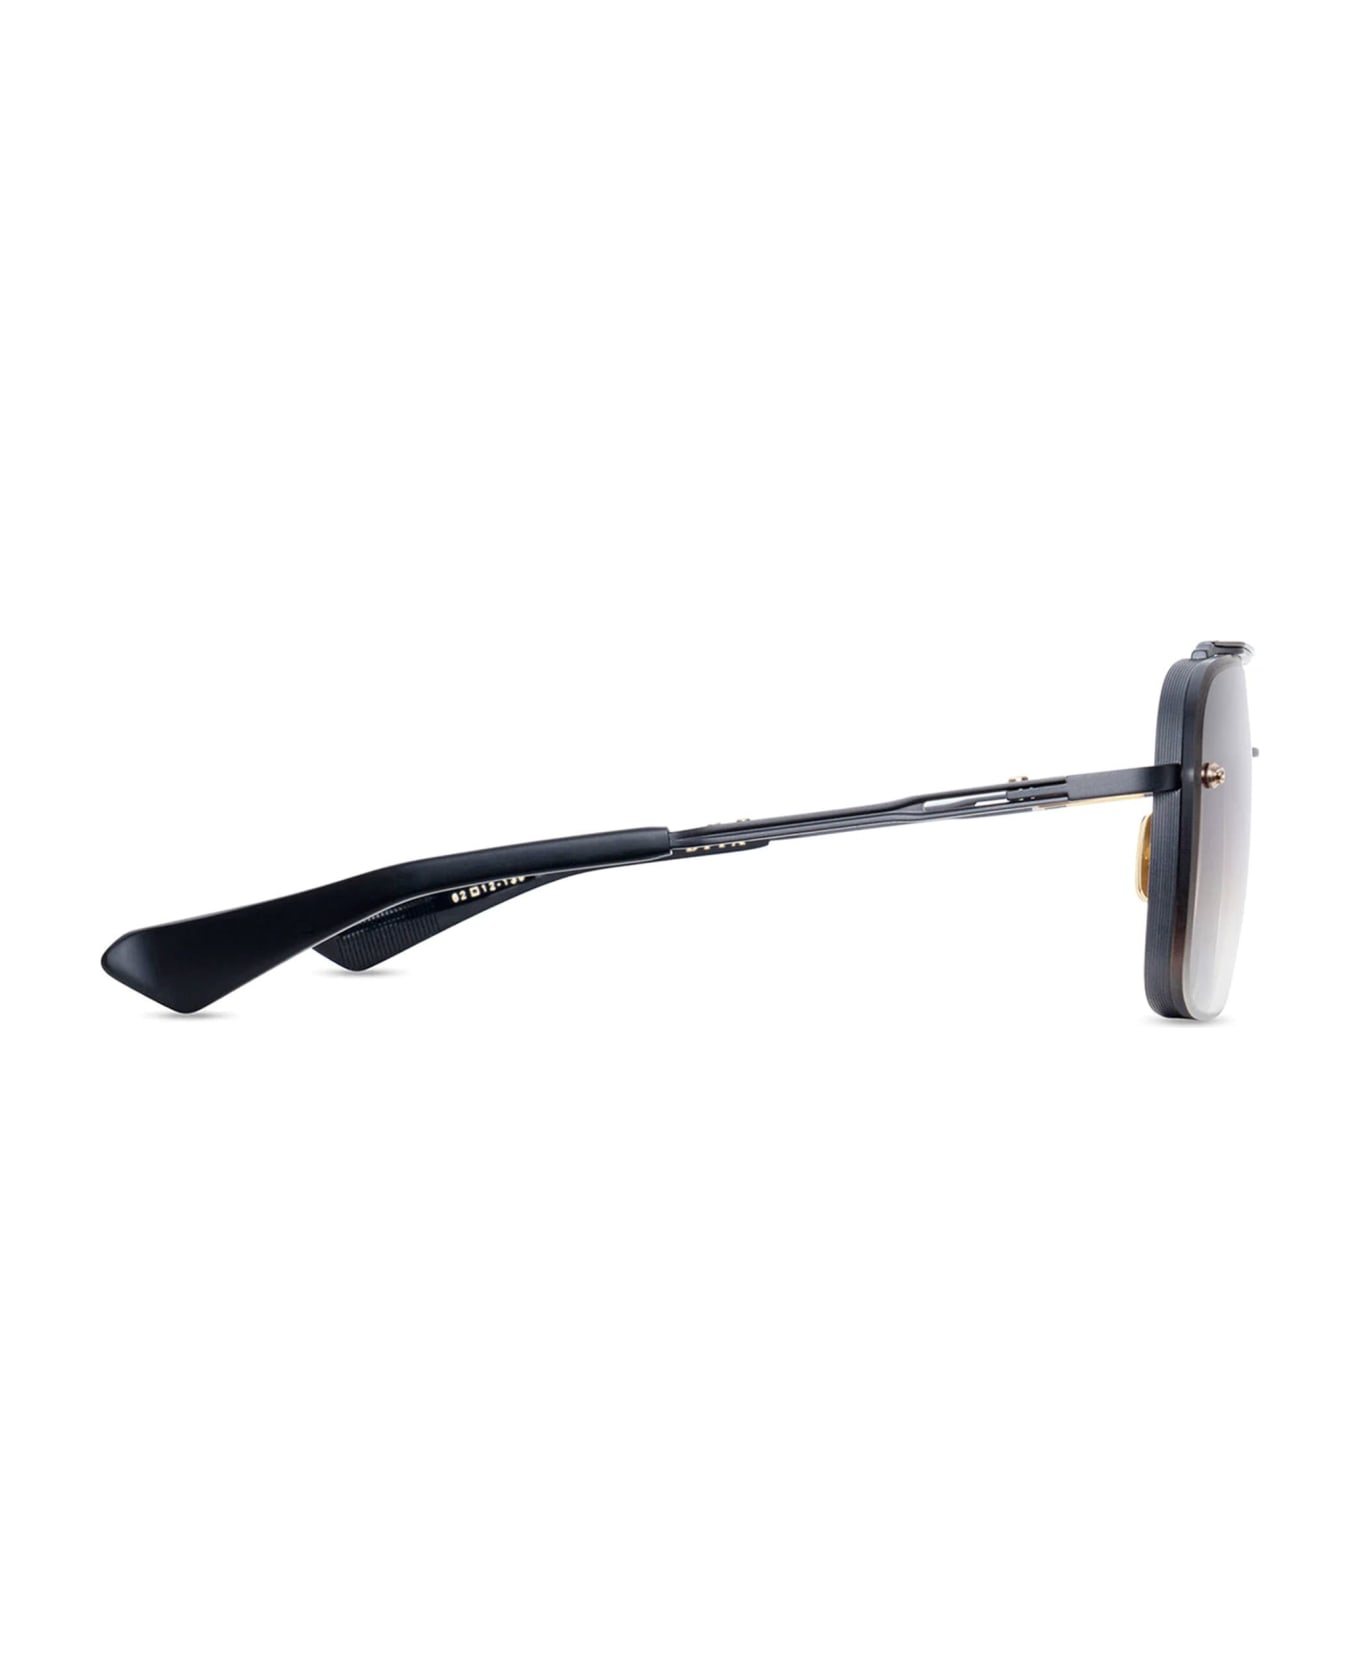 Dita Mach-six - Black Iron / Black Rhodium Sunglasses - black iron